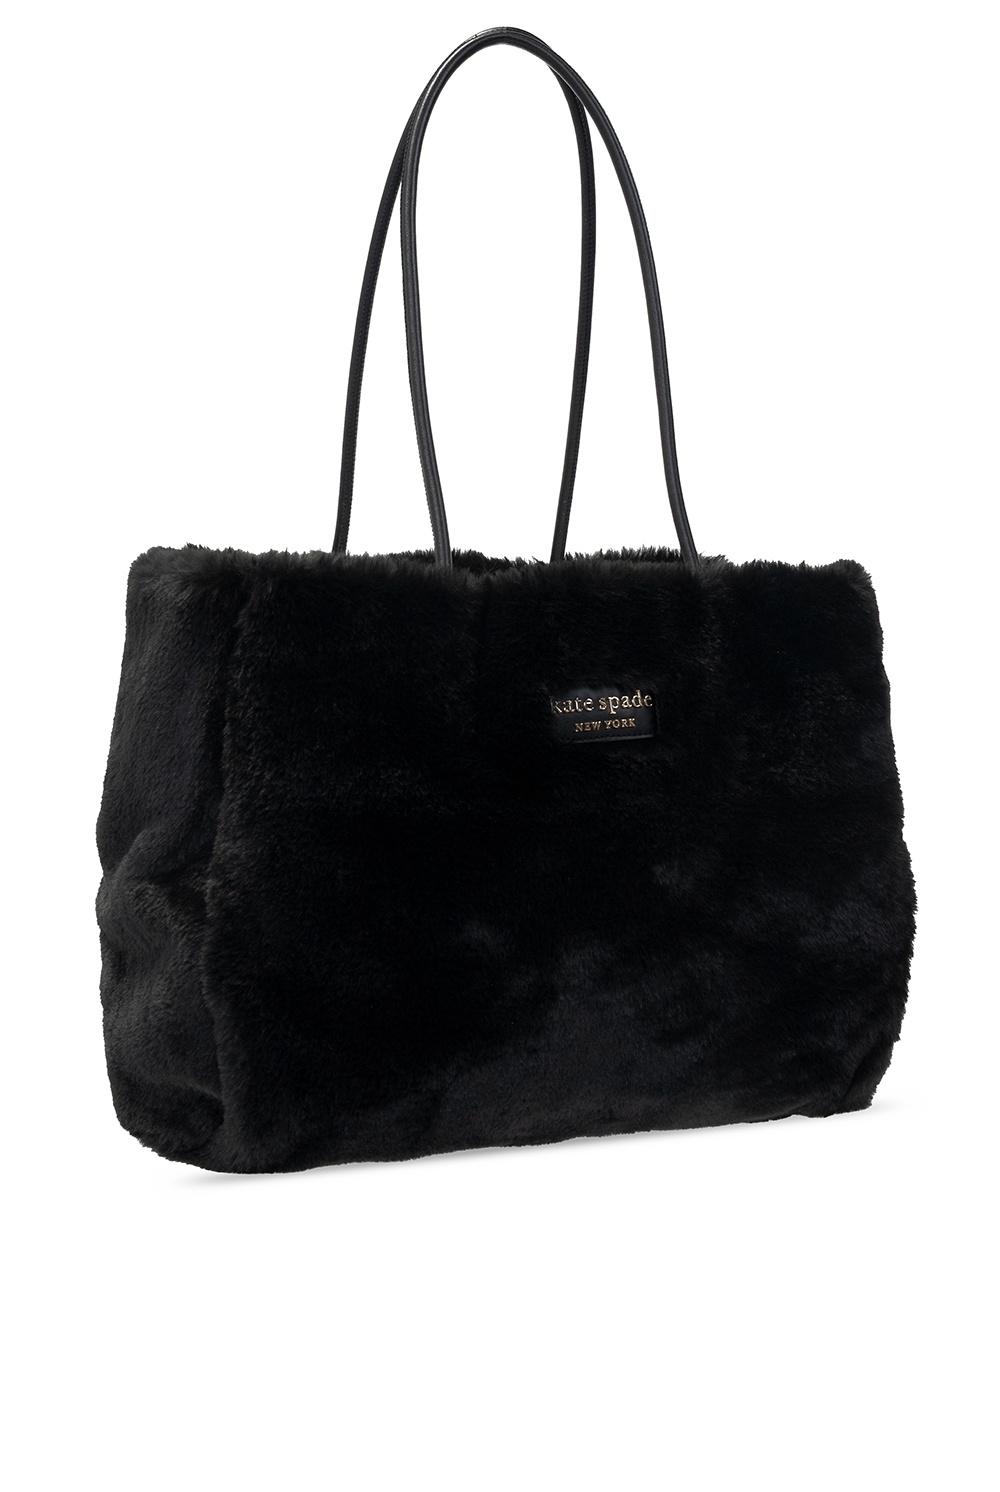 Authentic Women's The Mixed Media Snapshot Black Crossbody Bag